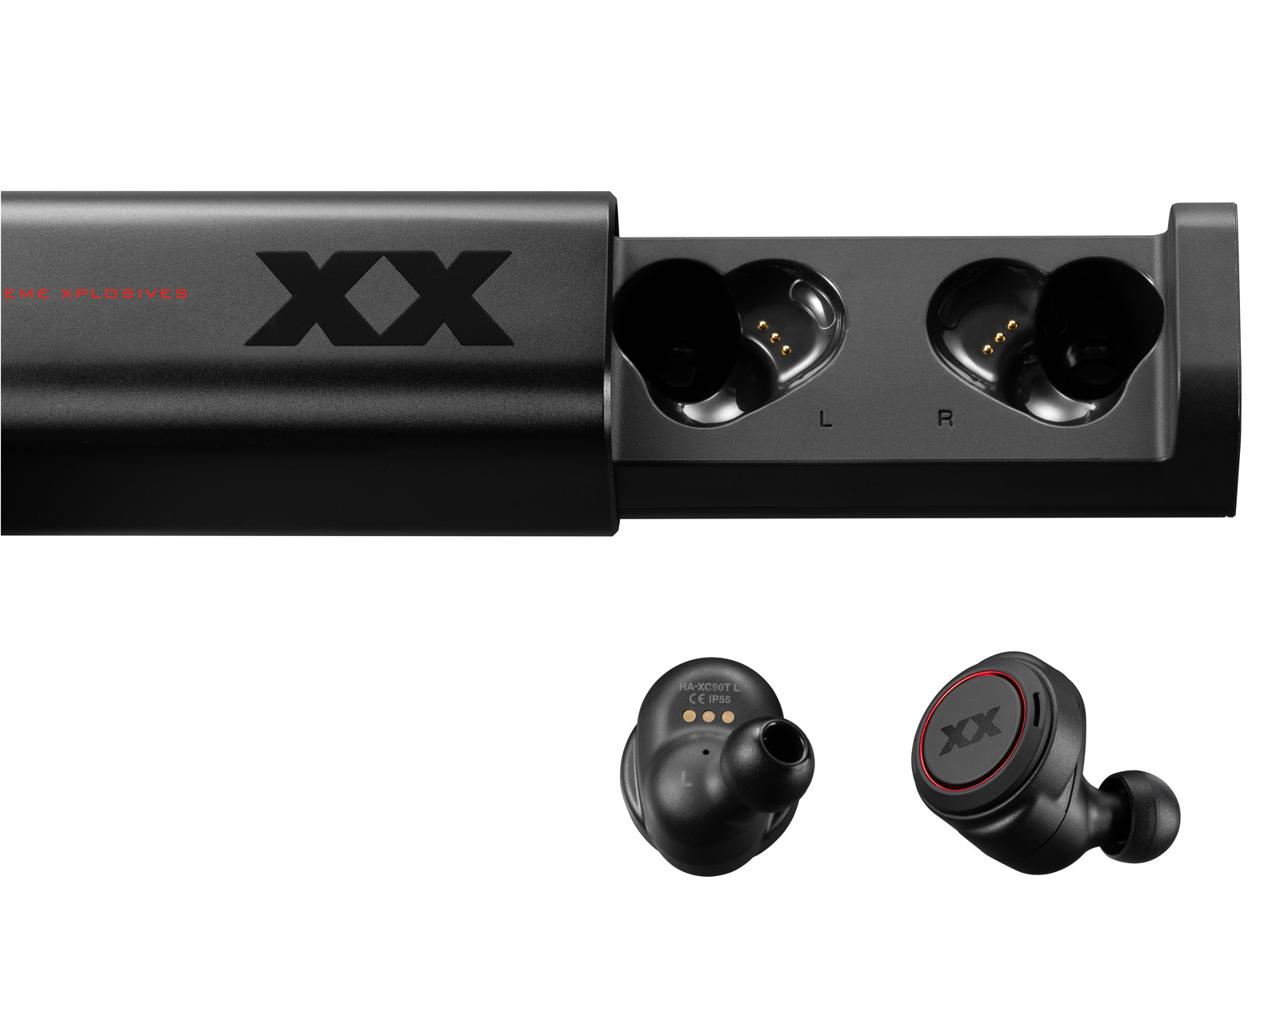 JVC HA-XC90T-U Bluetooth fülhallgató